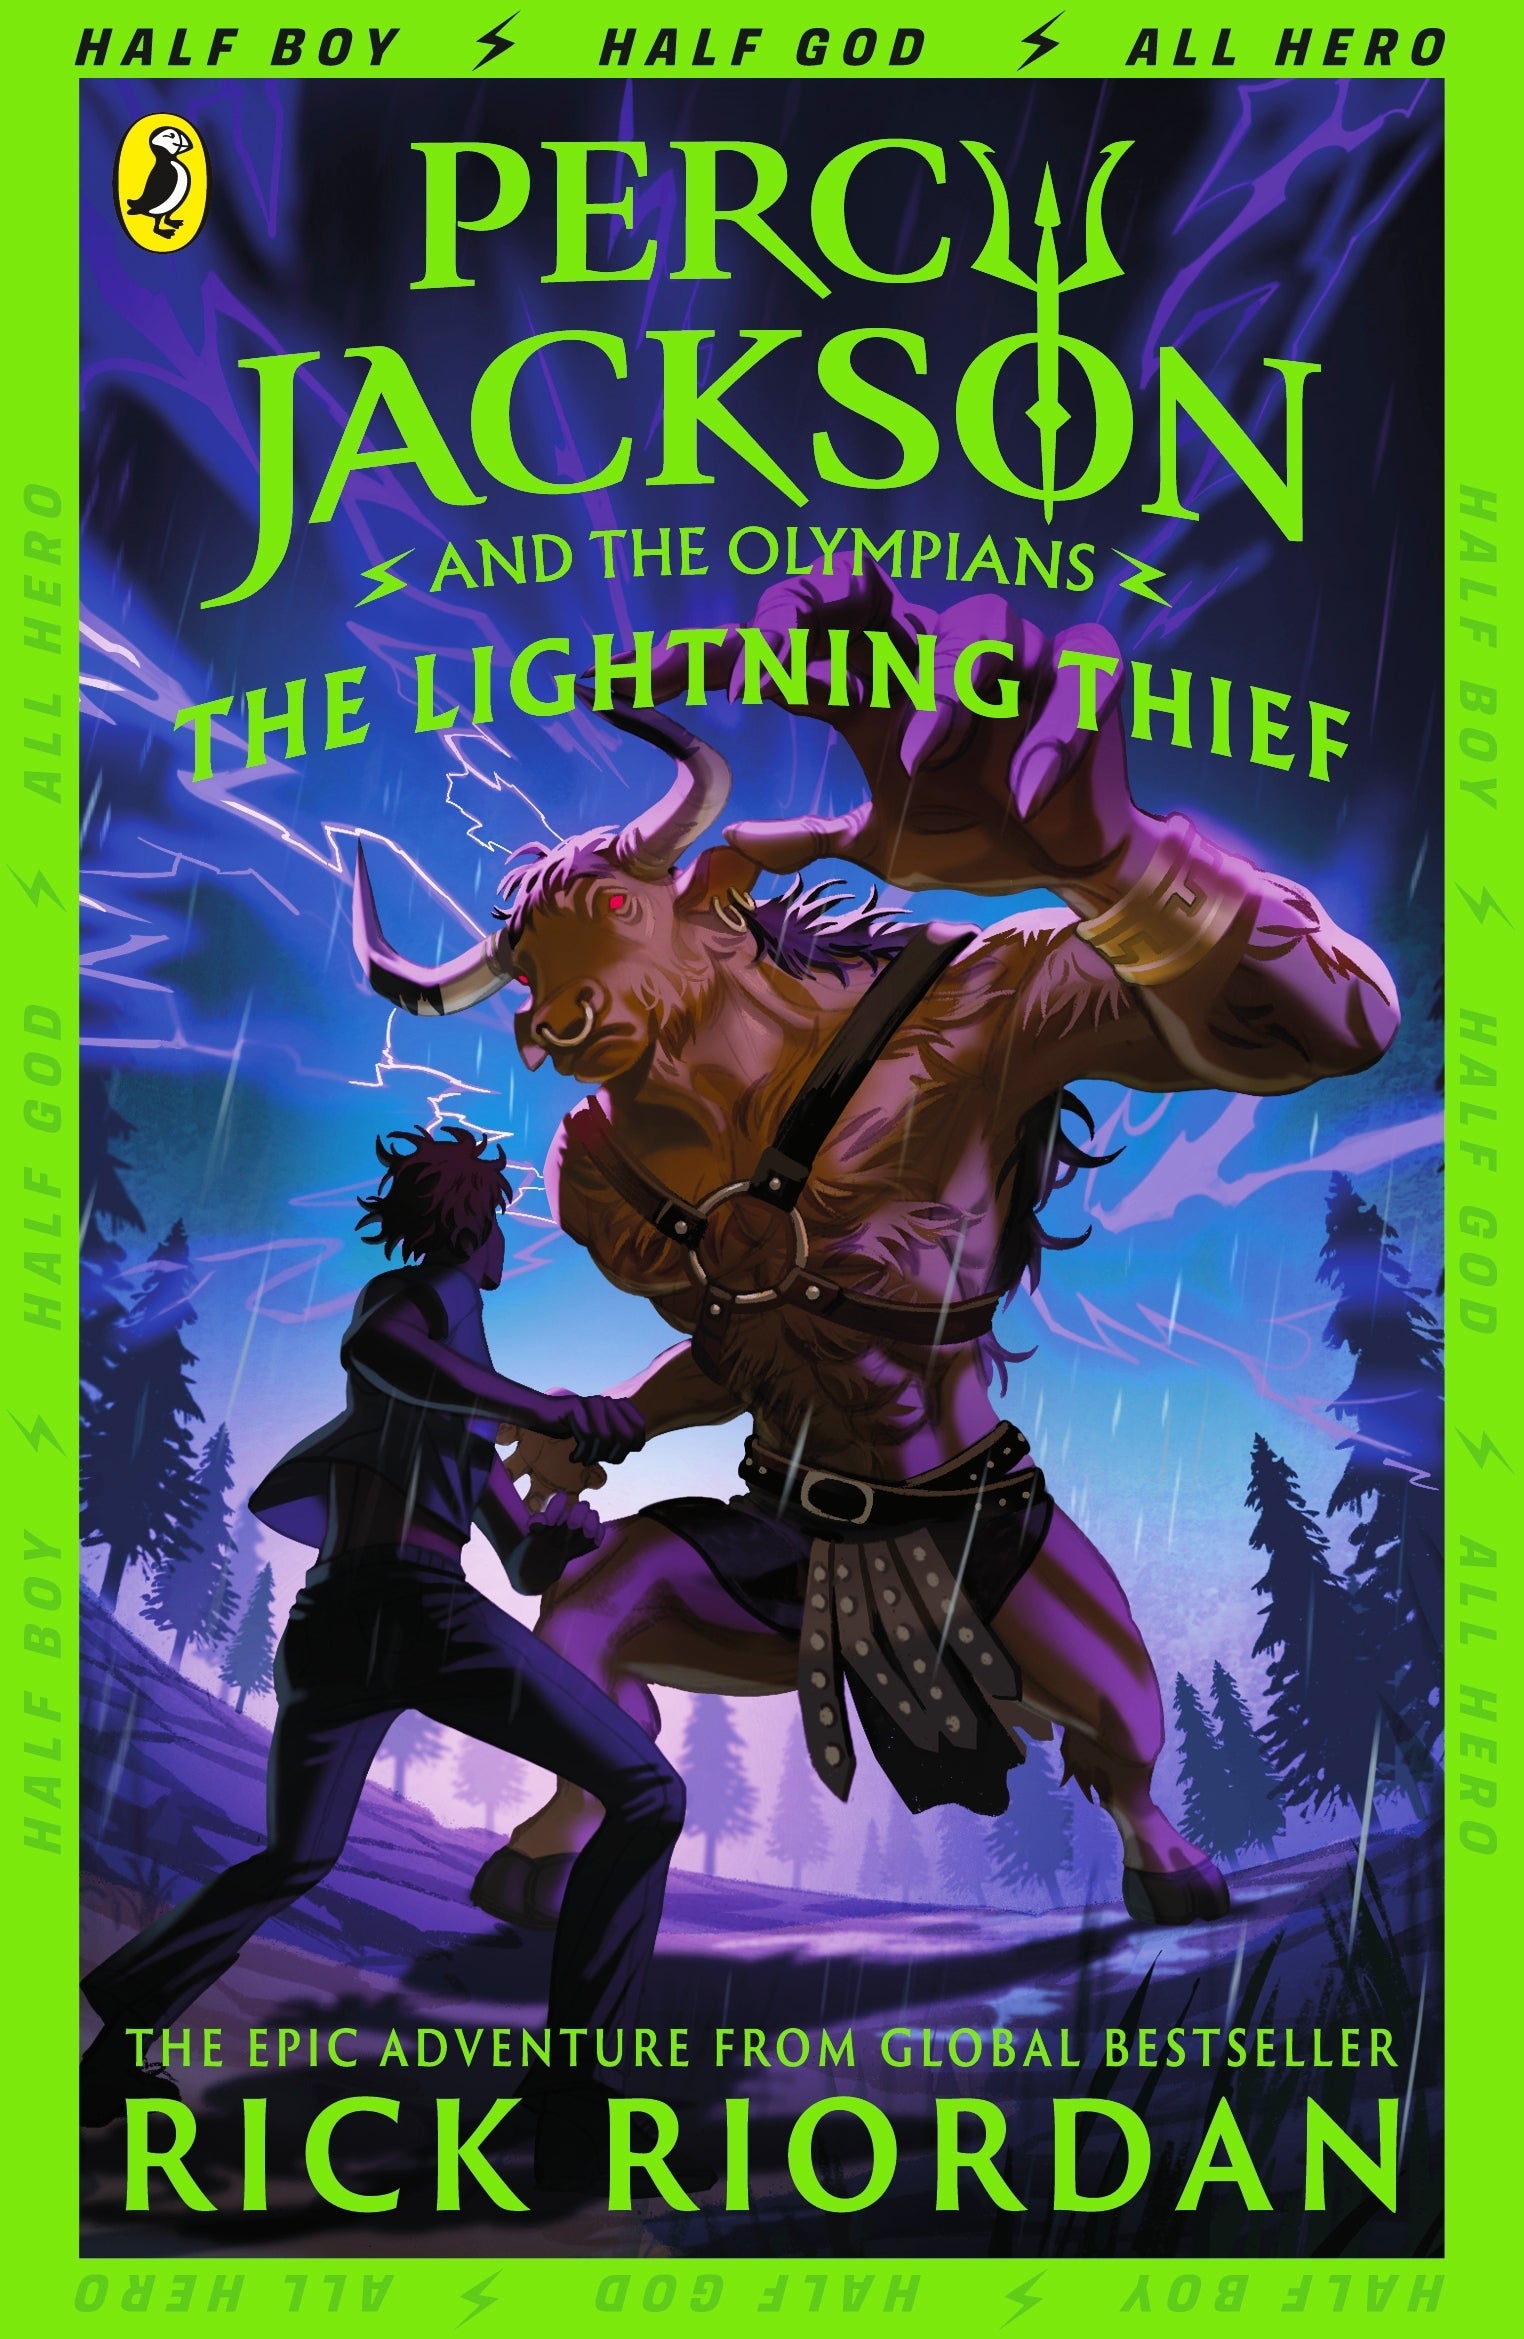 Percy Jackson and the Lightning Thief by Rick Riordan #1